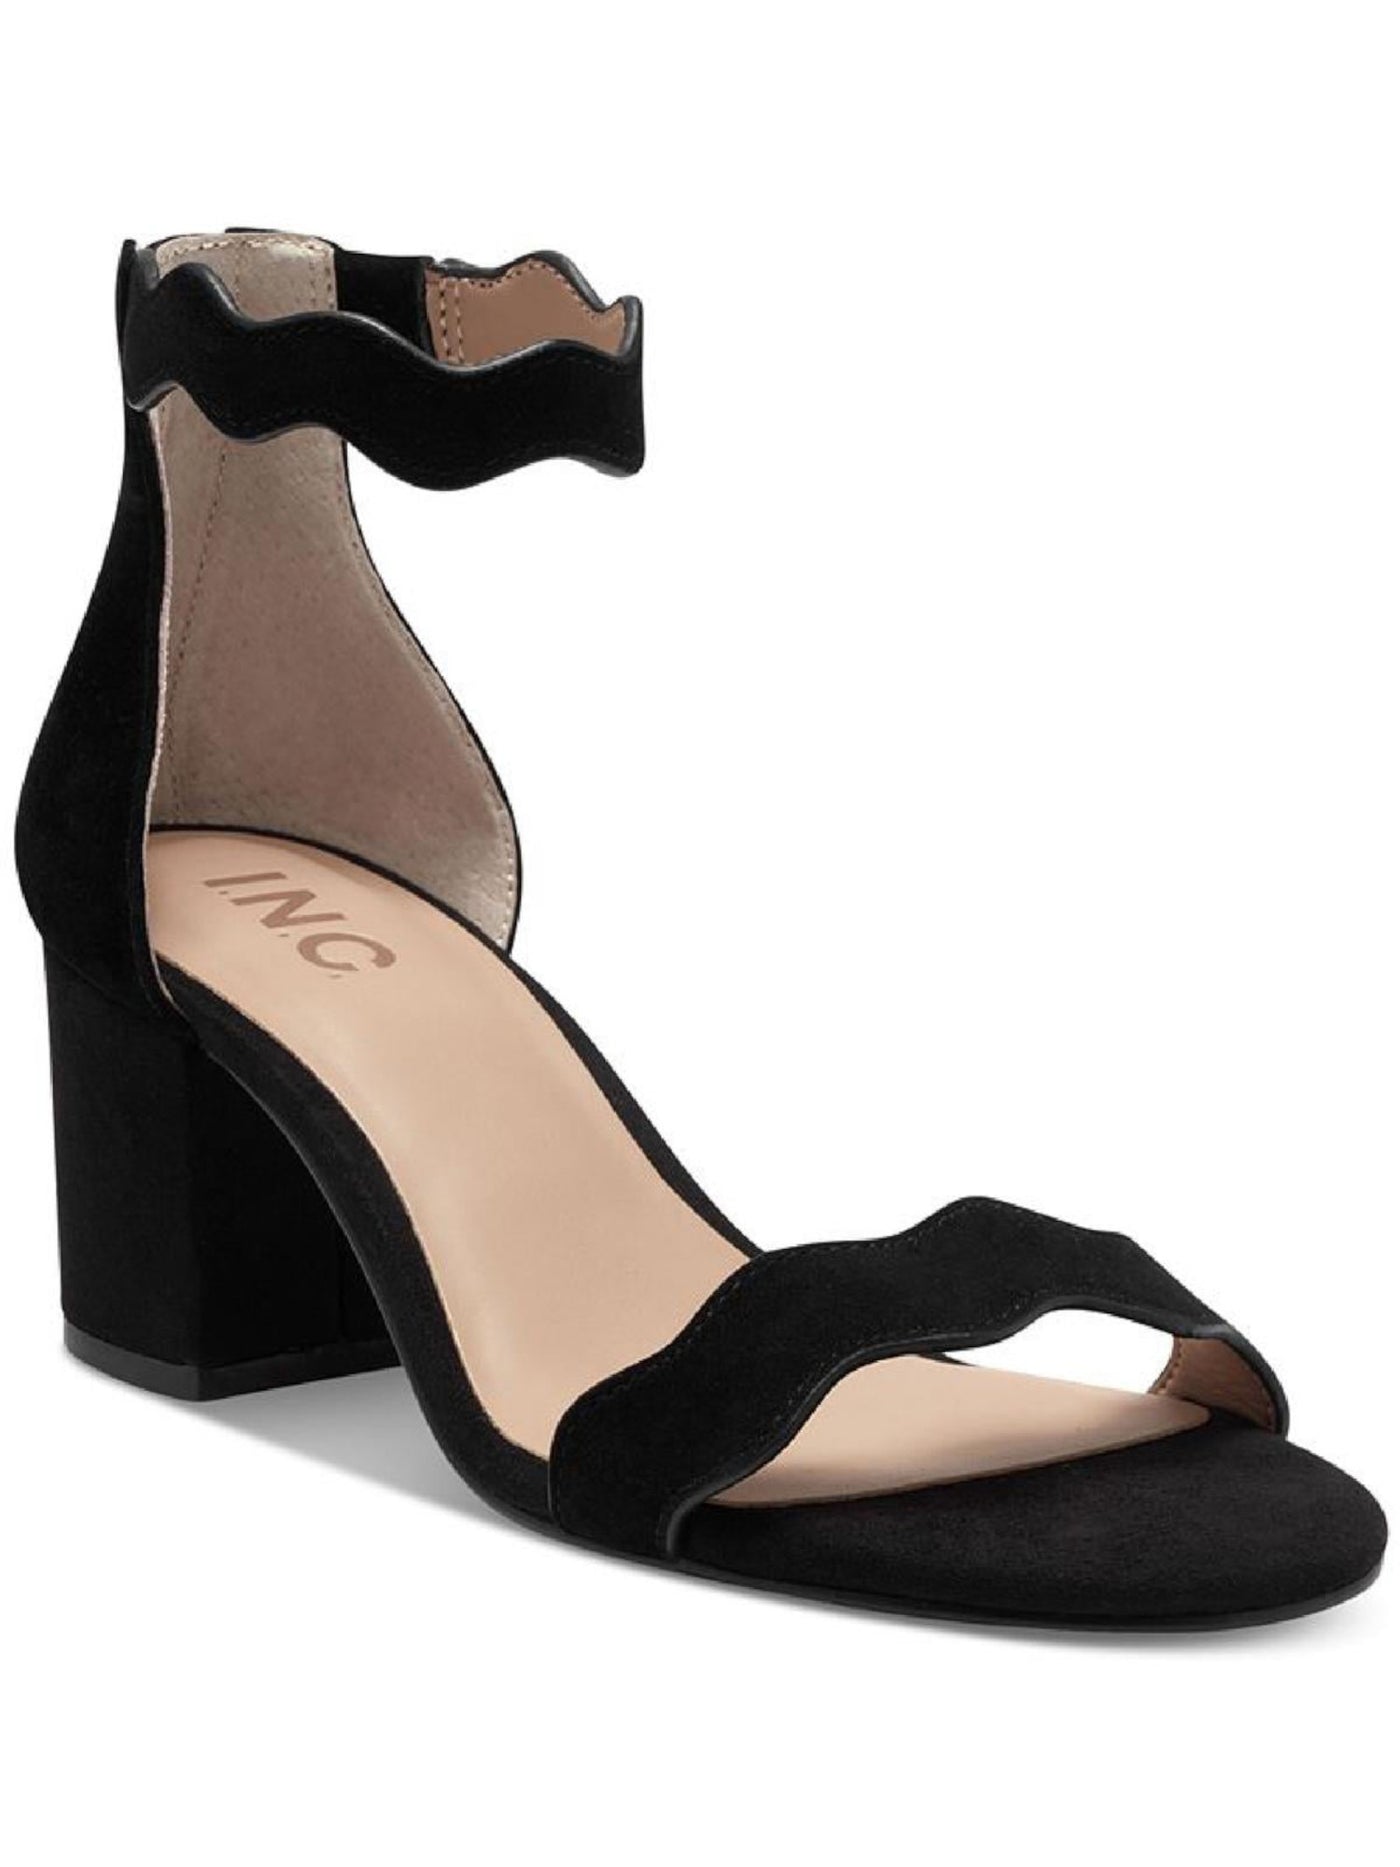 INC Womens Black Rhinestone Ankle Strap Scalloped Kadwin Round Toe Block Heel Zip-Up Dress Sandals Shoes 7.5 M